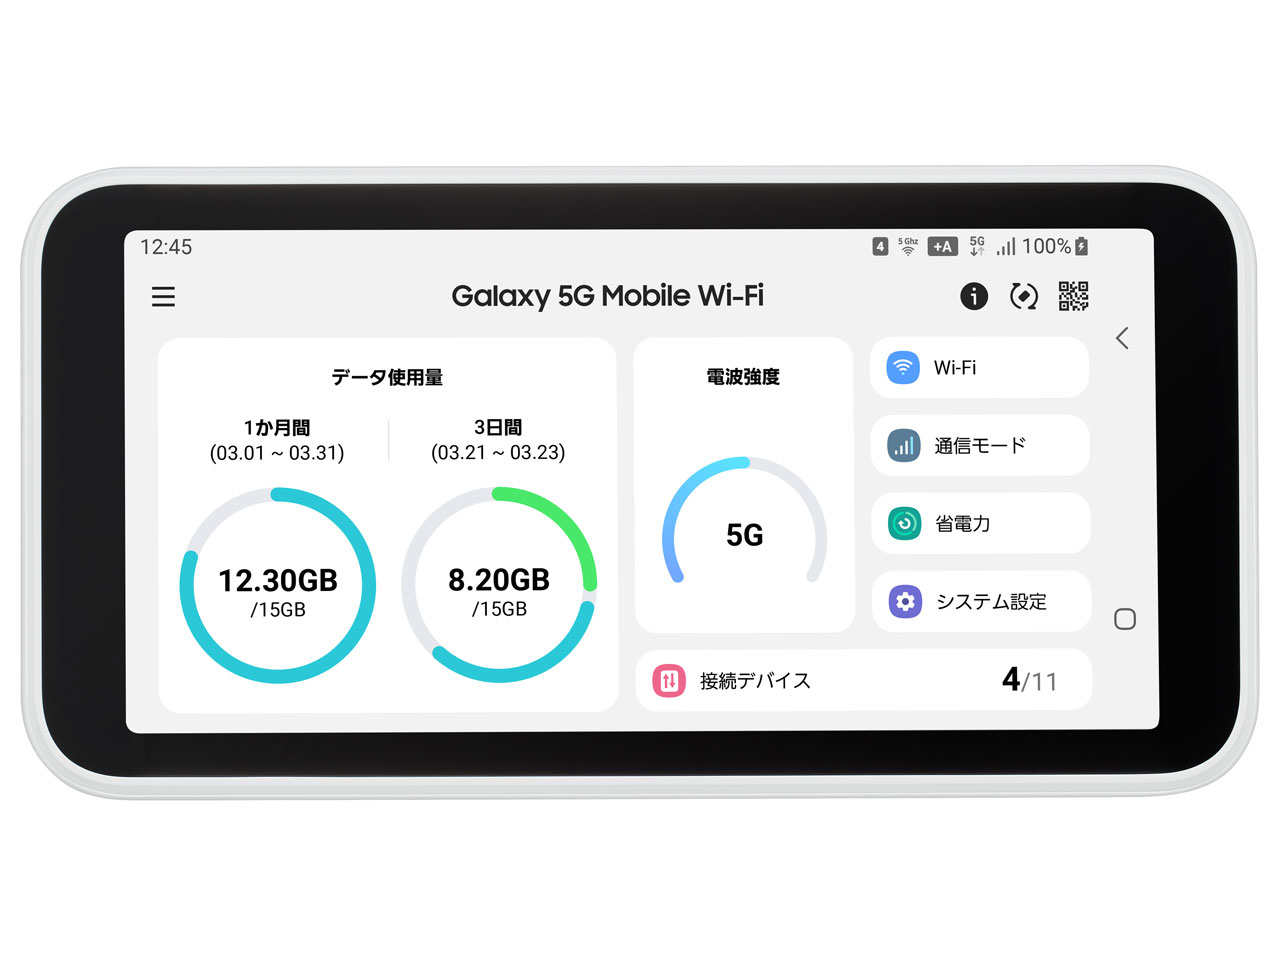 Galaxy 5G Mobile Wi-Fi [ホワイト] の製品画像